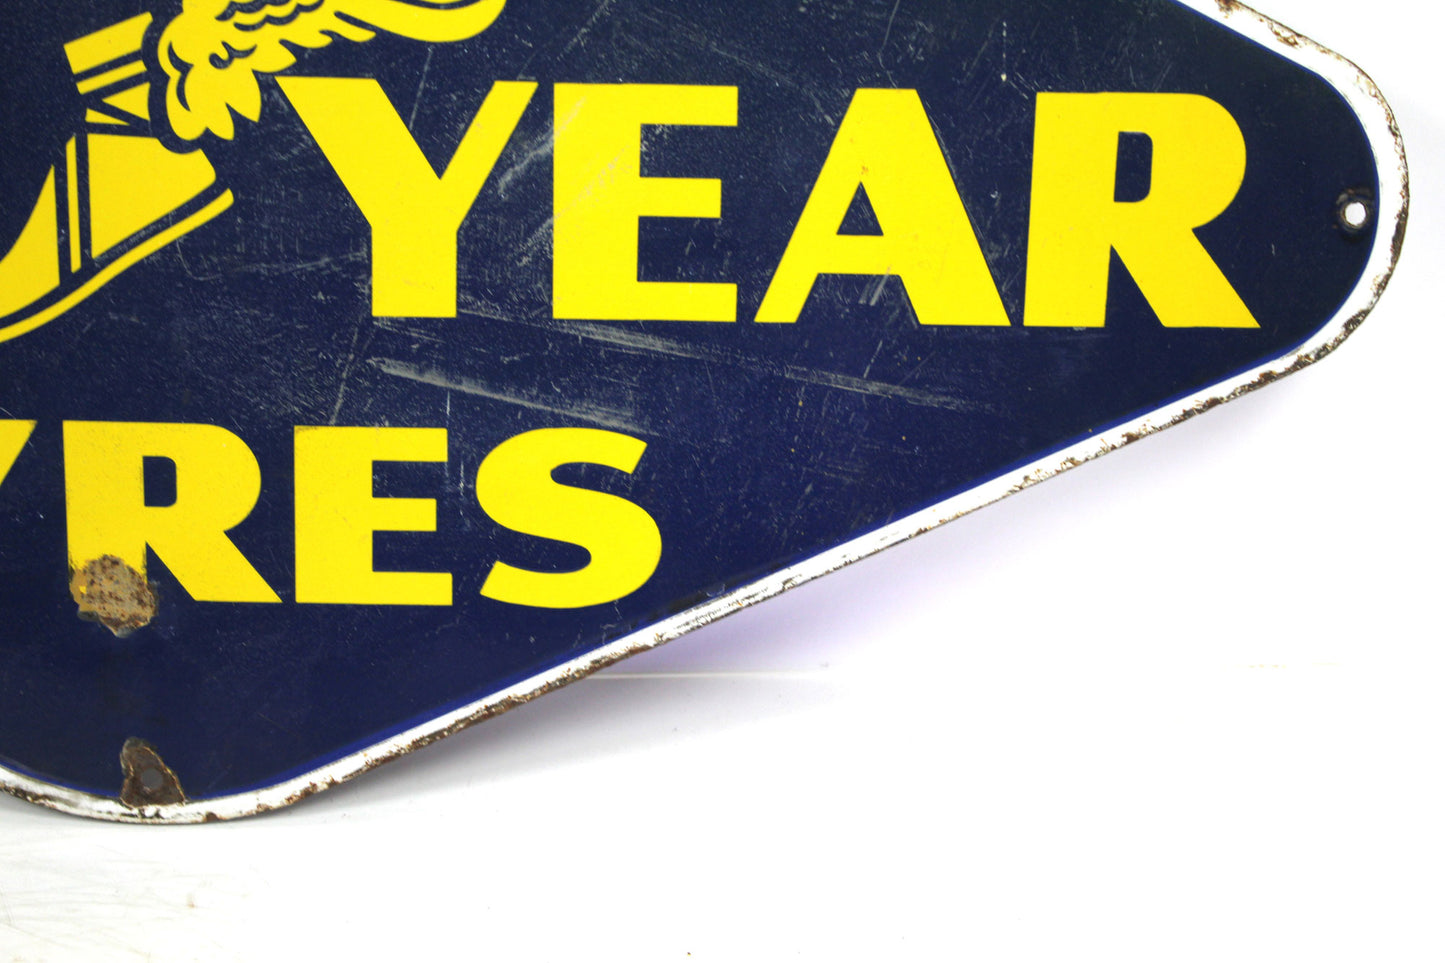 Good Year Tyres Enamel Sign 36" x 19"